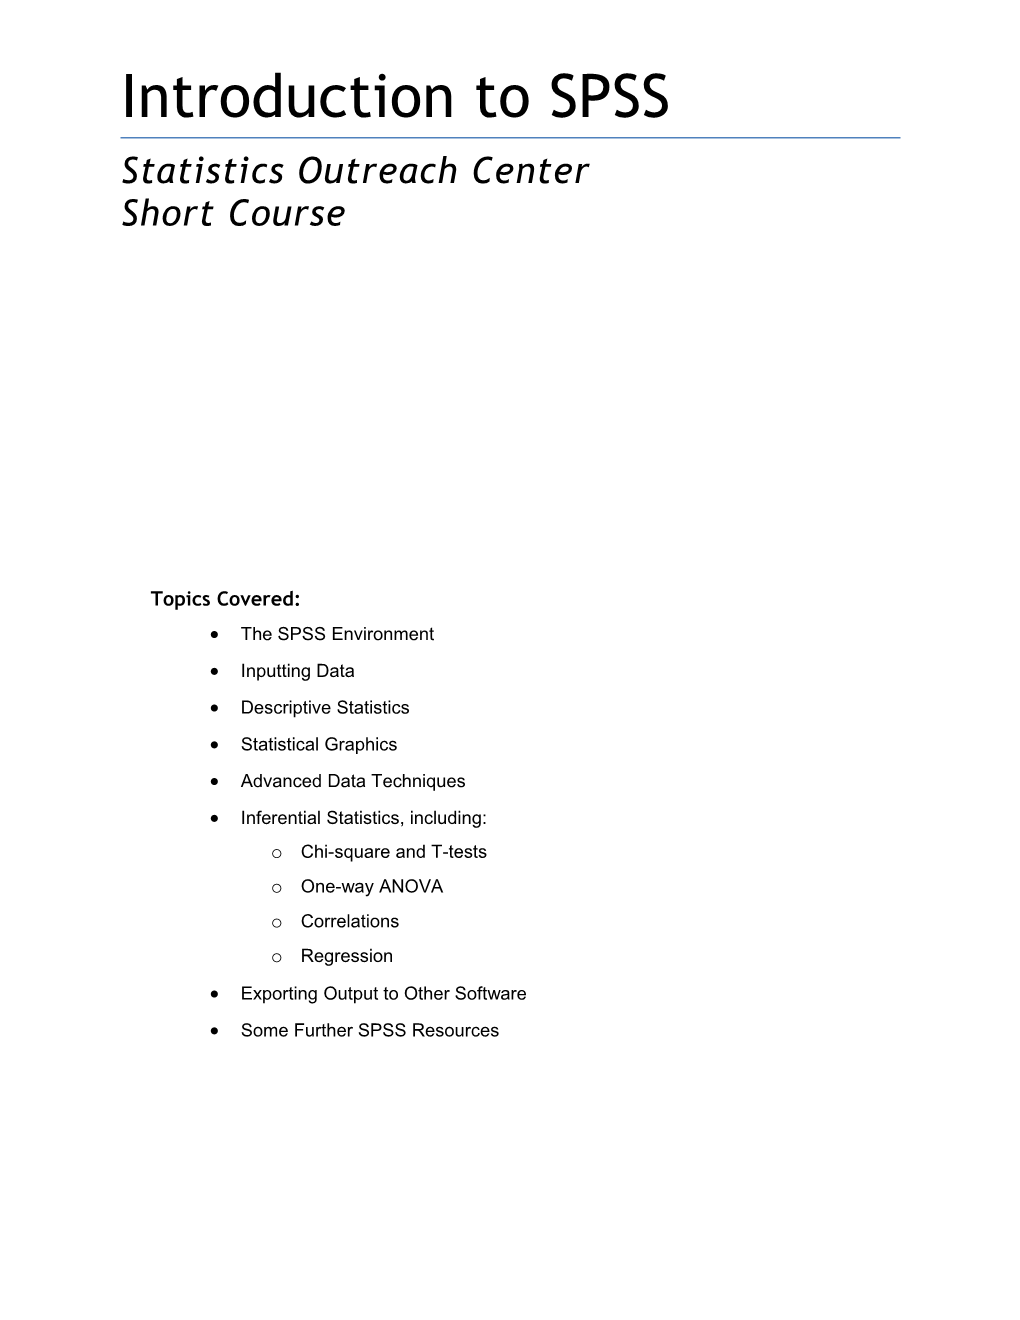 Statistics Outreach Center Short Course